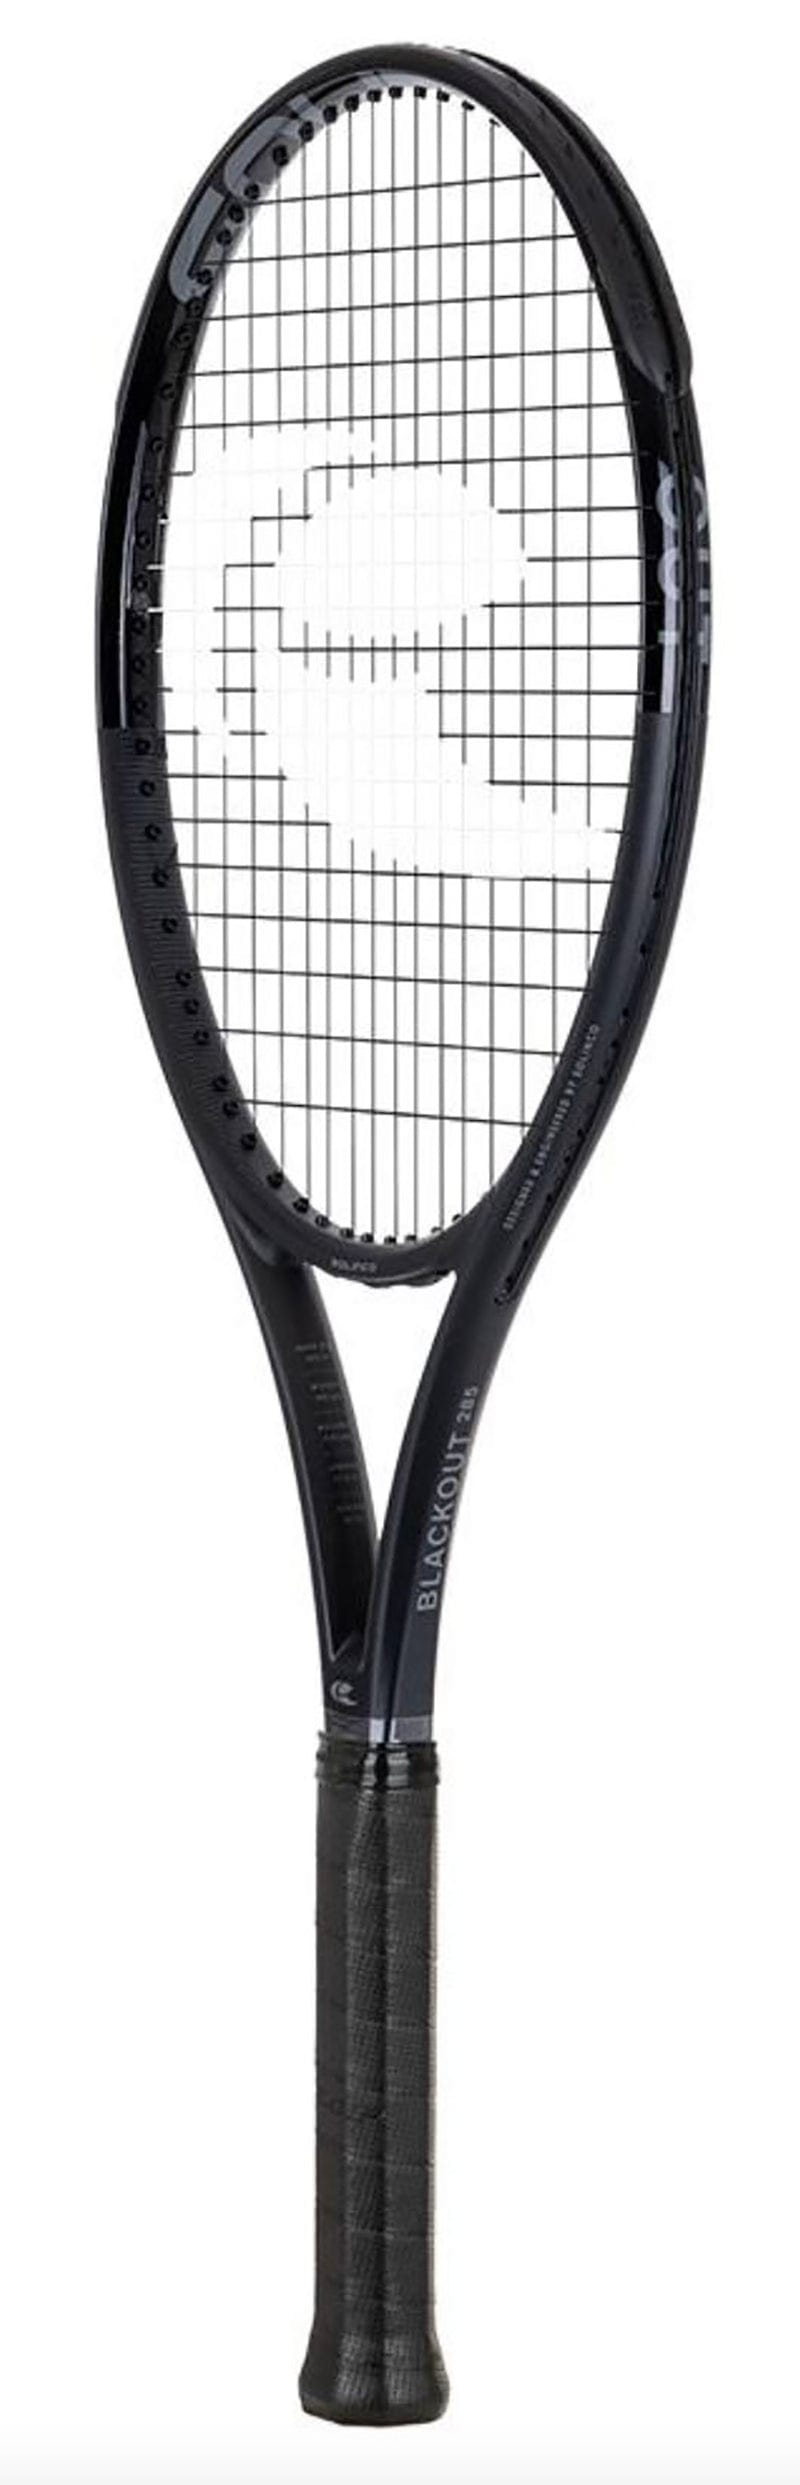 Prestigieus sticker Blaast op Solinco Blackout 285 Tennis Racquet